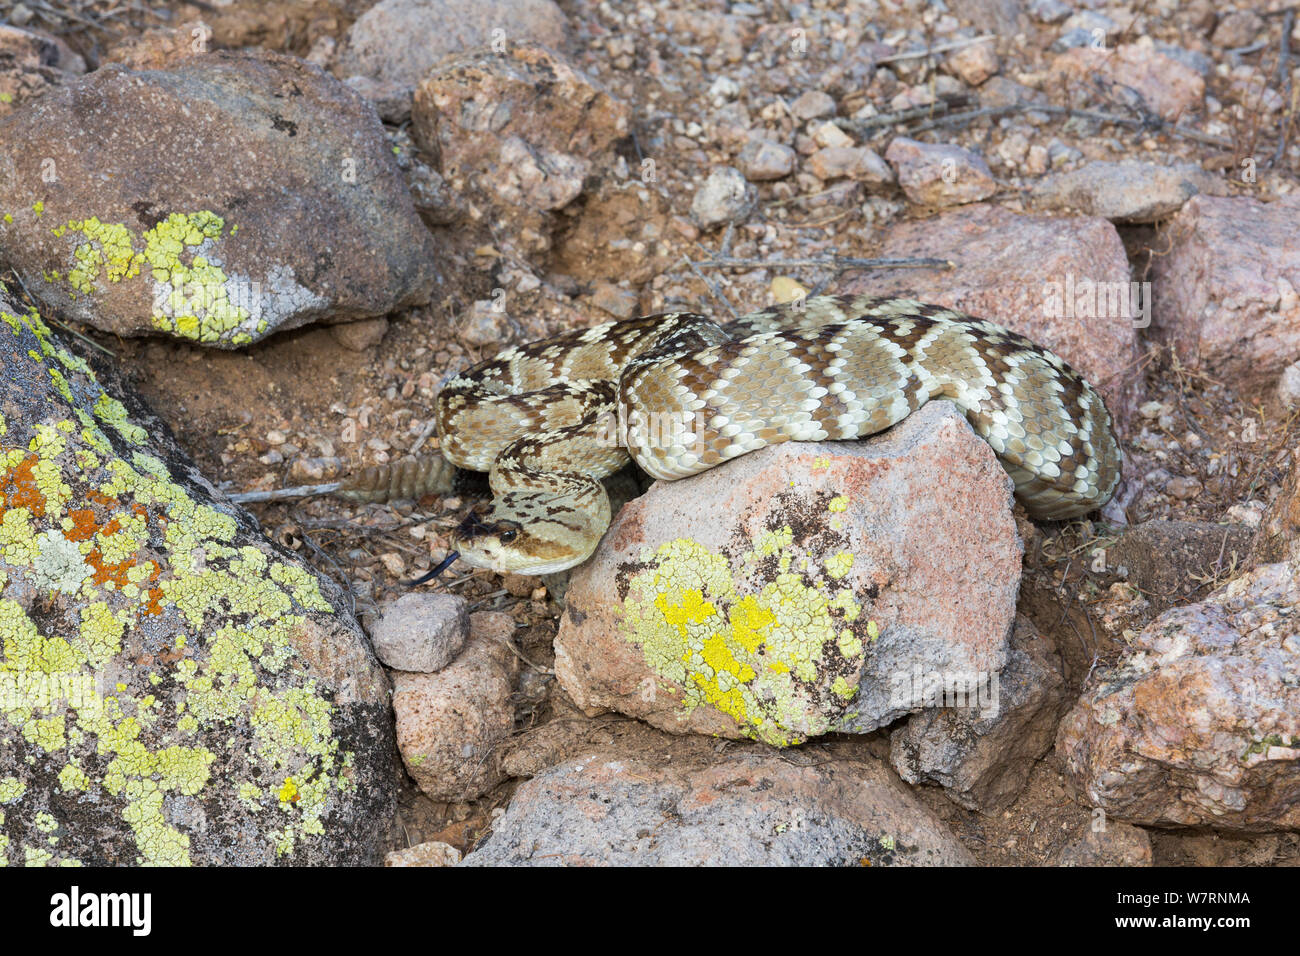 Northern Black-Tailed Rattlesnake (Crotalus molossus molossus) Sonoran Desert, Mesa, Arizona, USA. Non-exclusive Stock Photo